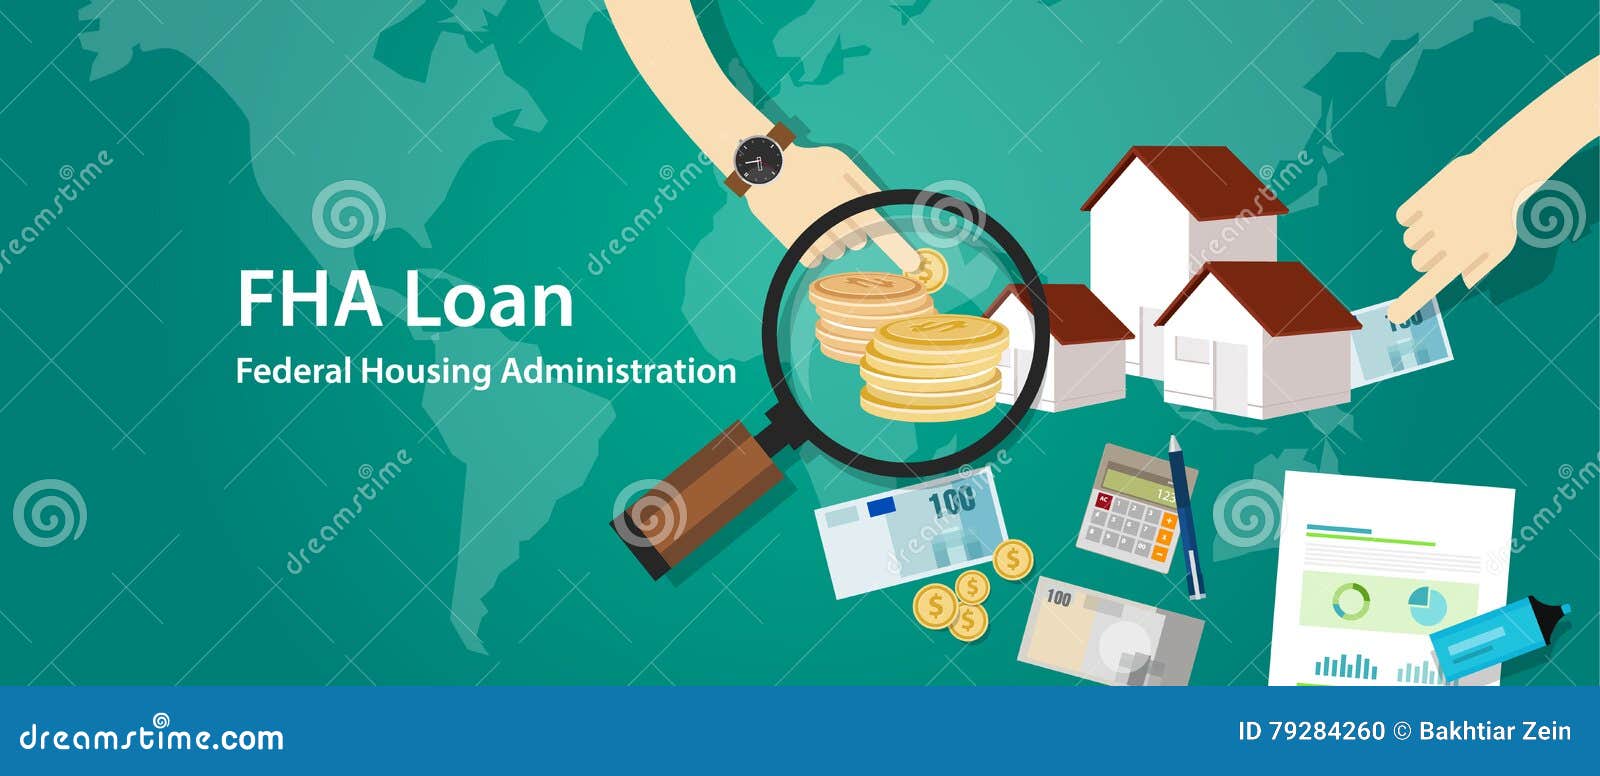 fha loan federal housing administration